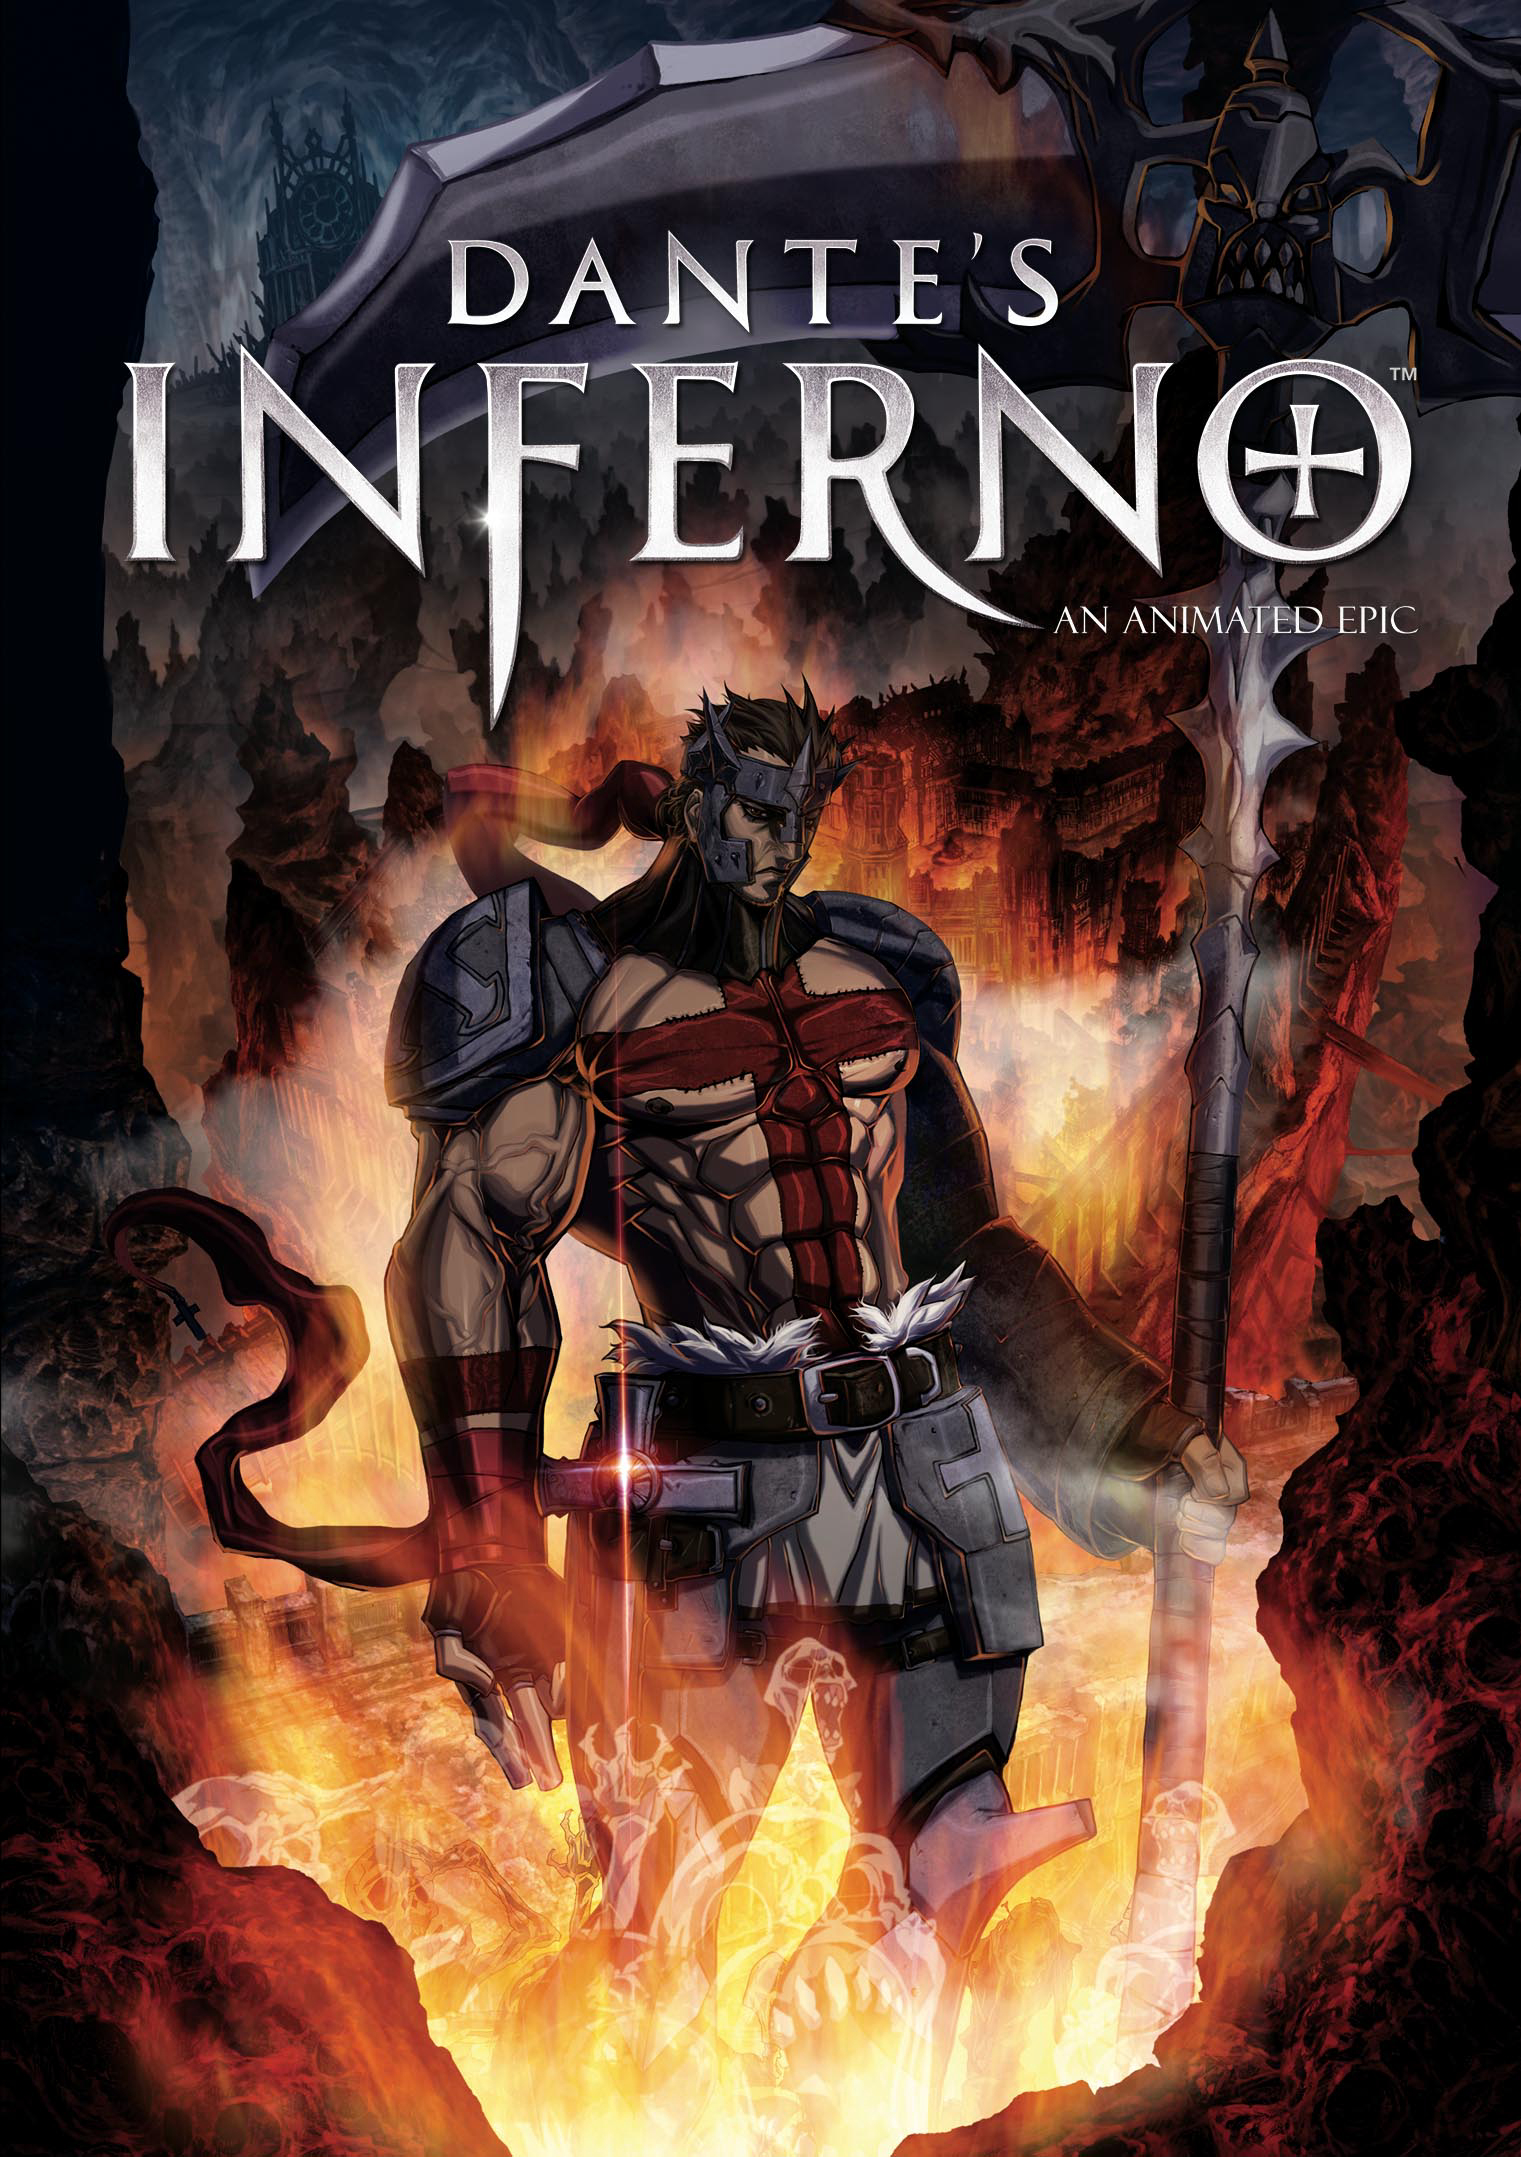 Xem Phim Dũng Sĩ Dante - Dante's Inferno: An Animated Epic - online truc tuyen vietsub mien phi hinh anh 1